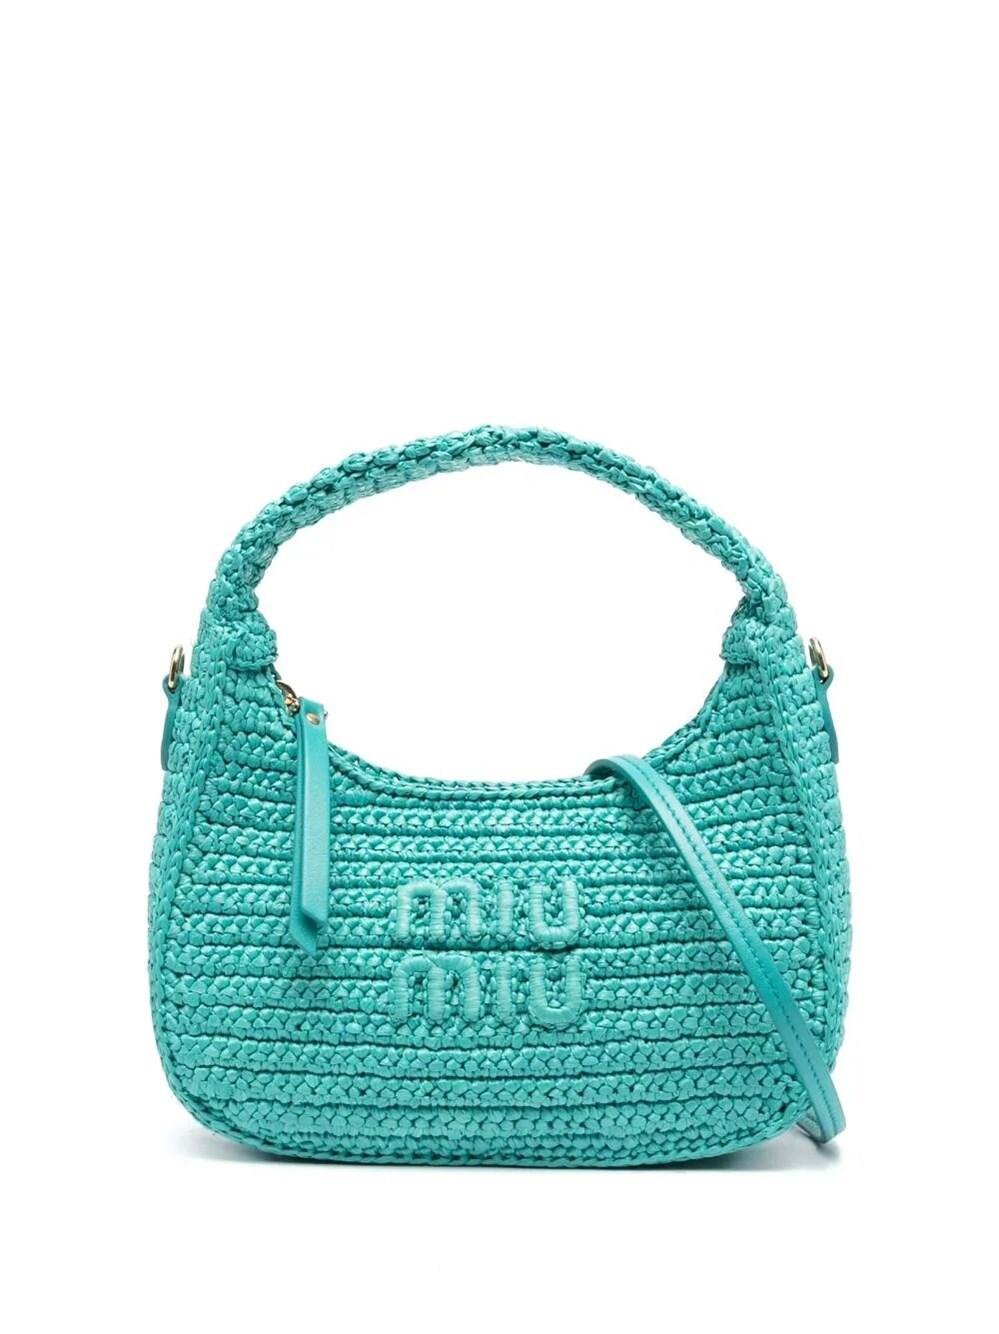 Miu Miu Crochet Bag in Blue | Lyst